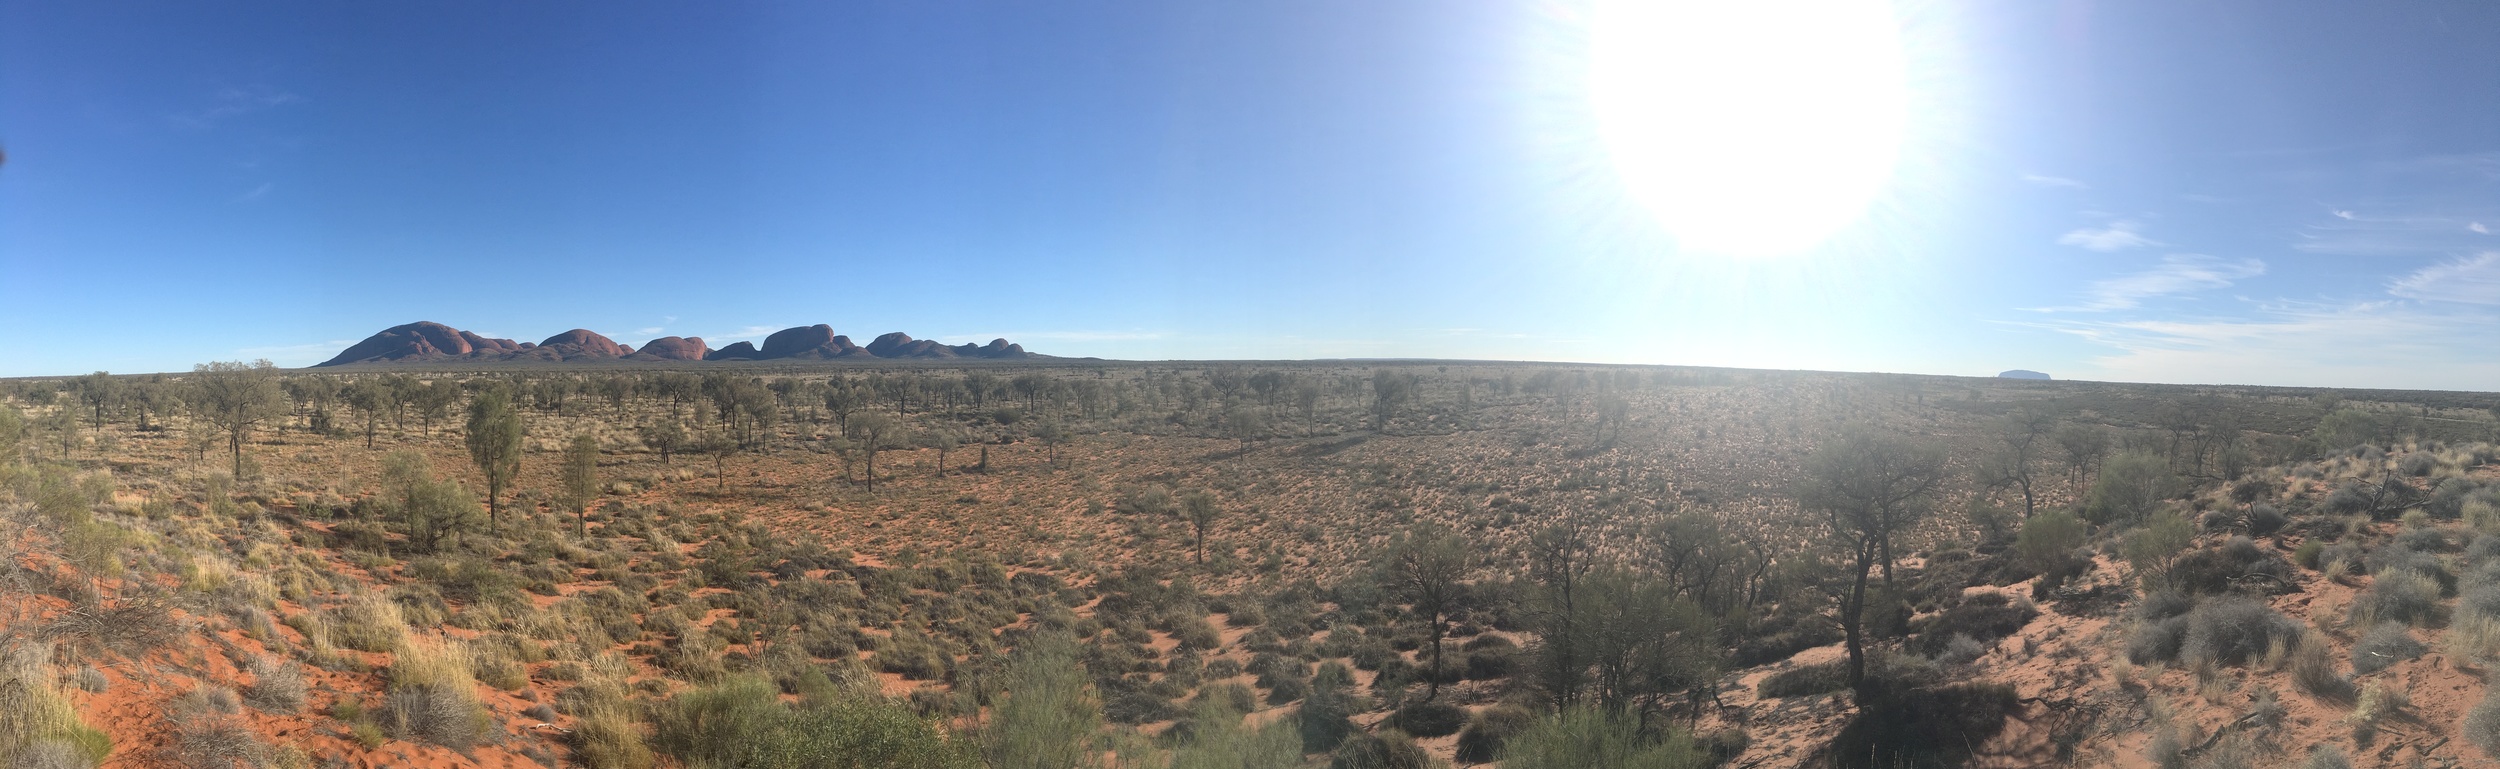 Kata Tjuta and Uluru